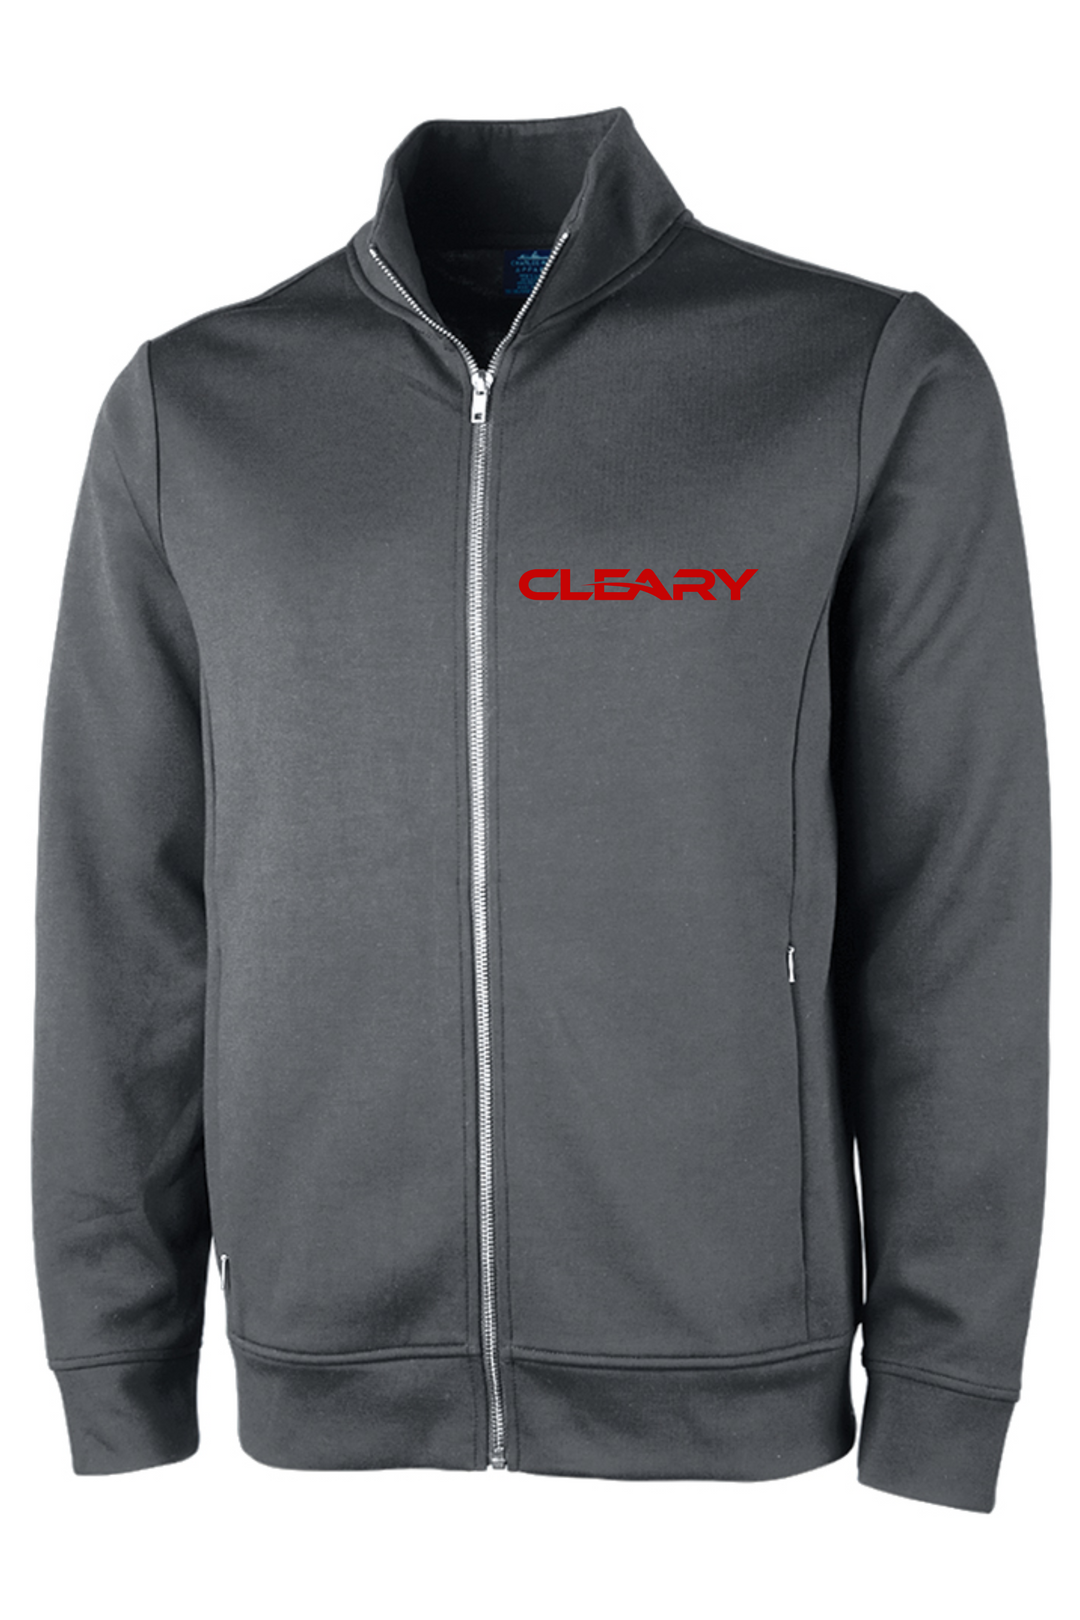 Cleary's Men's Seaport Full Zip Performance Jacket Grey